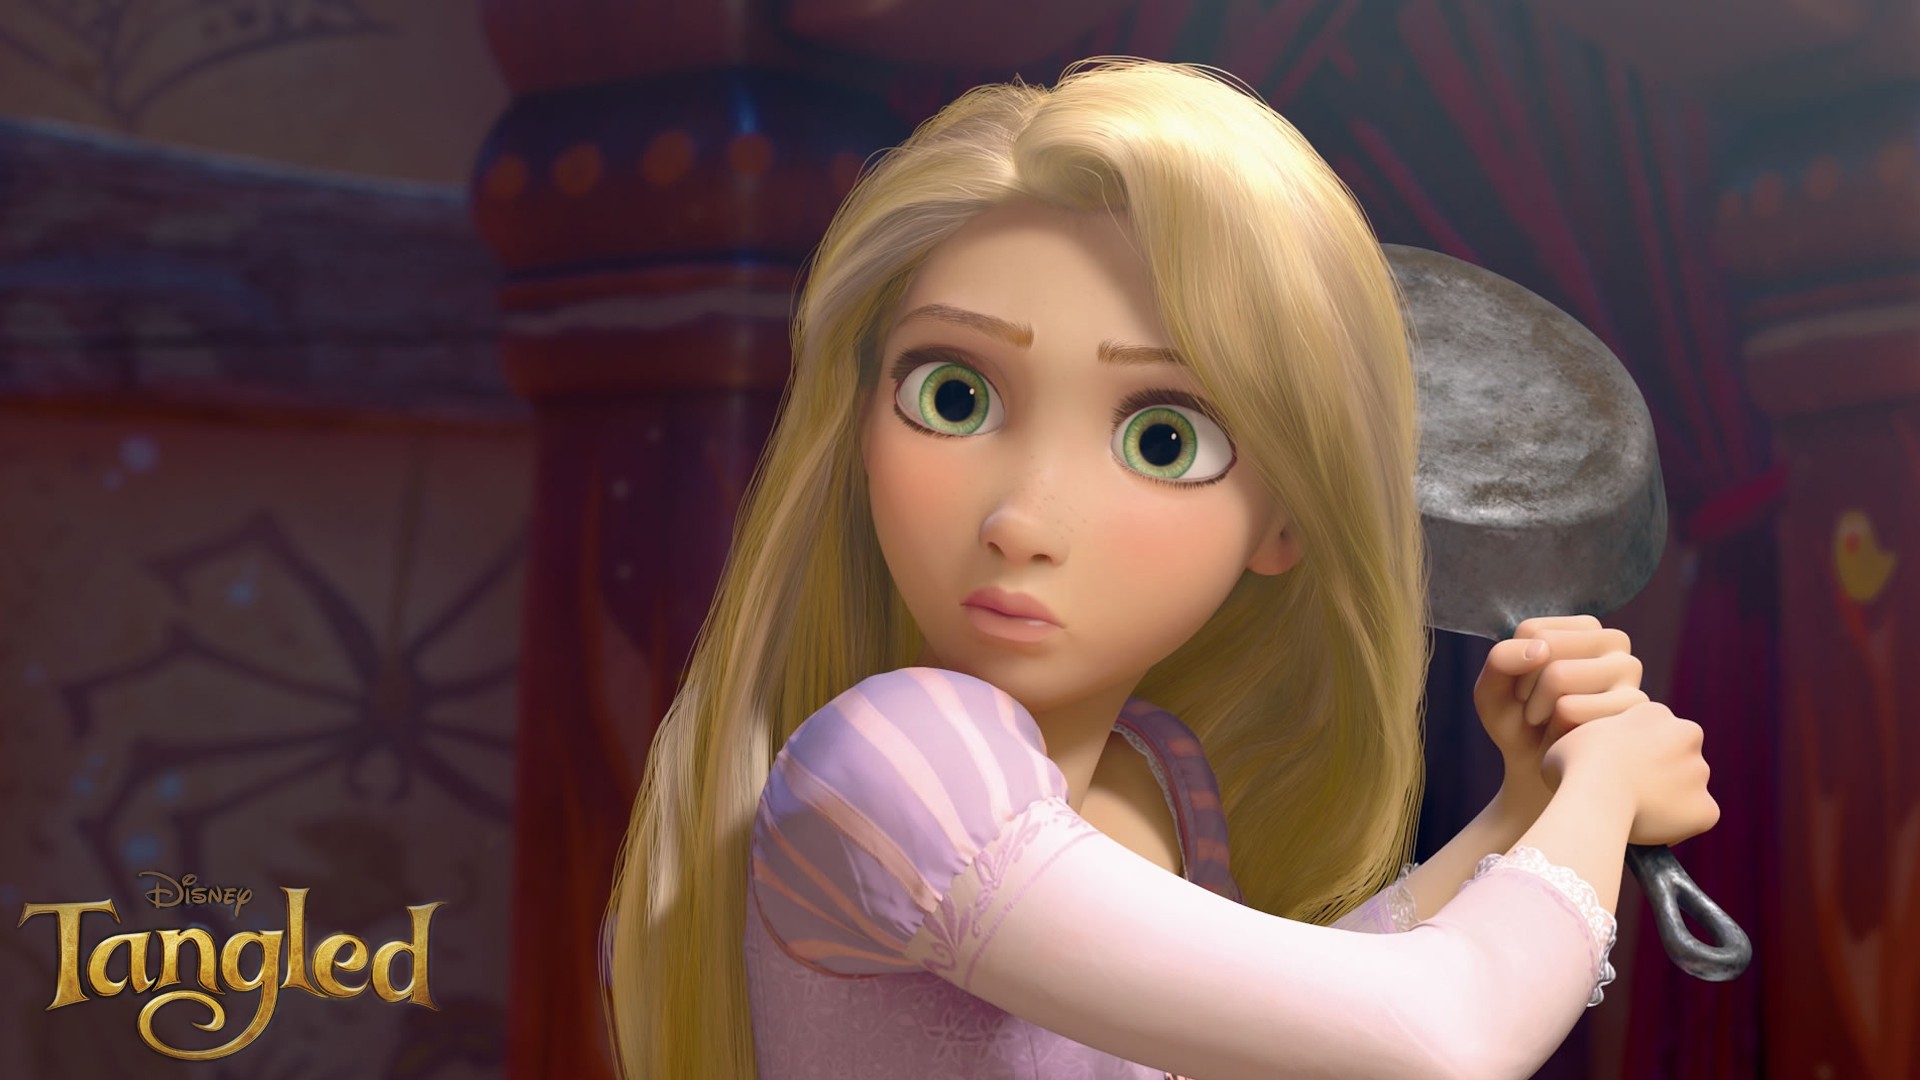 General 1920x1080 movies Tangled Disney Rapunzel animated movies blonde long hair green eyes Disney princesses Pans (Tool)